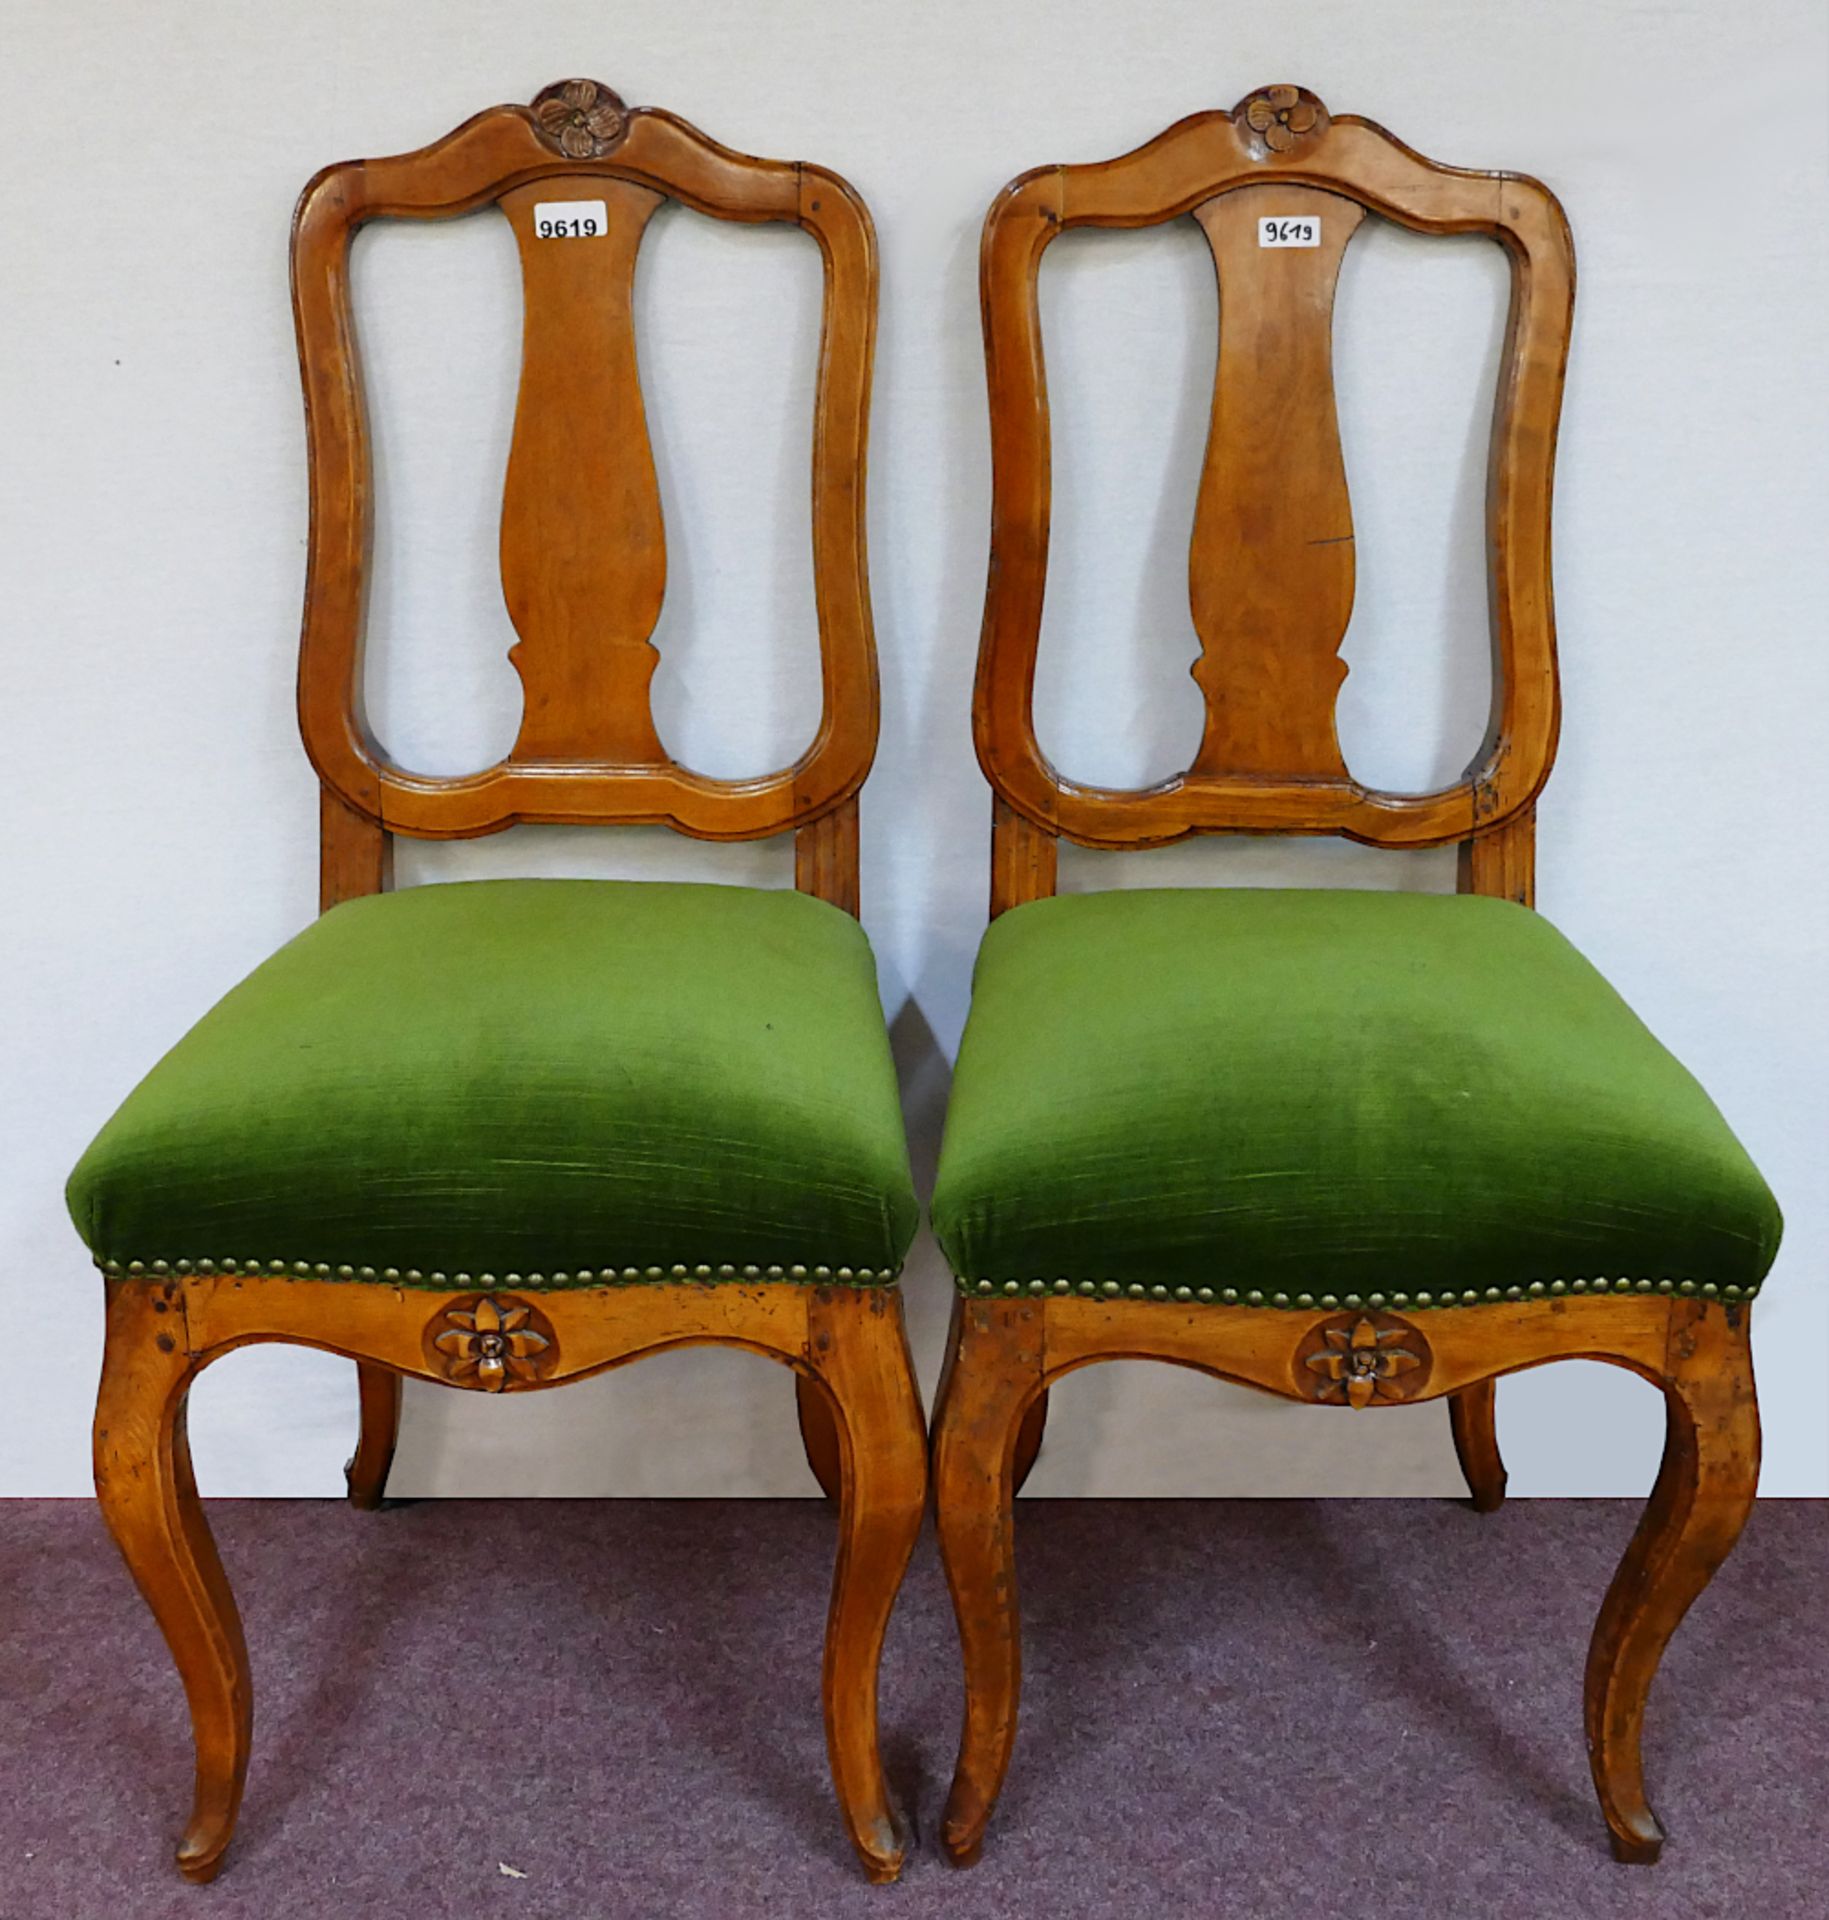 1 Paar Barockstühle wohl 18. Jh. Holz beschnitzt mit Blumenmedaillon, je H ca. 100cm, je Sitzfläche